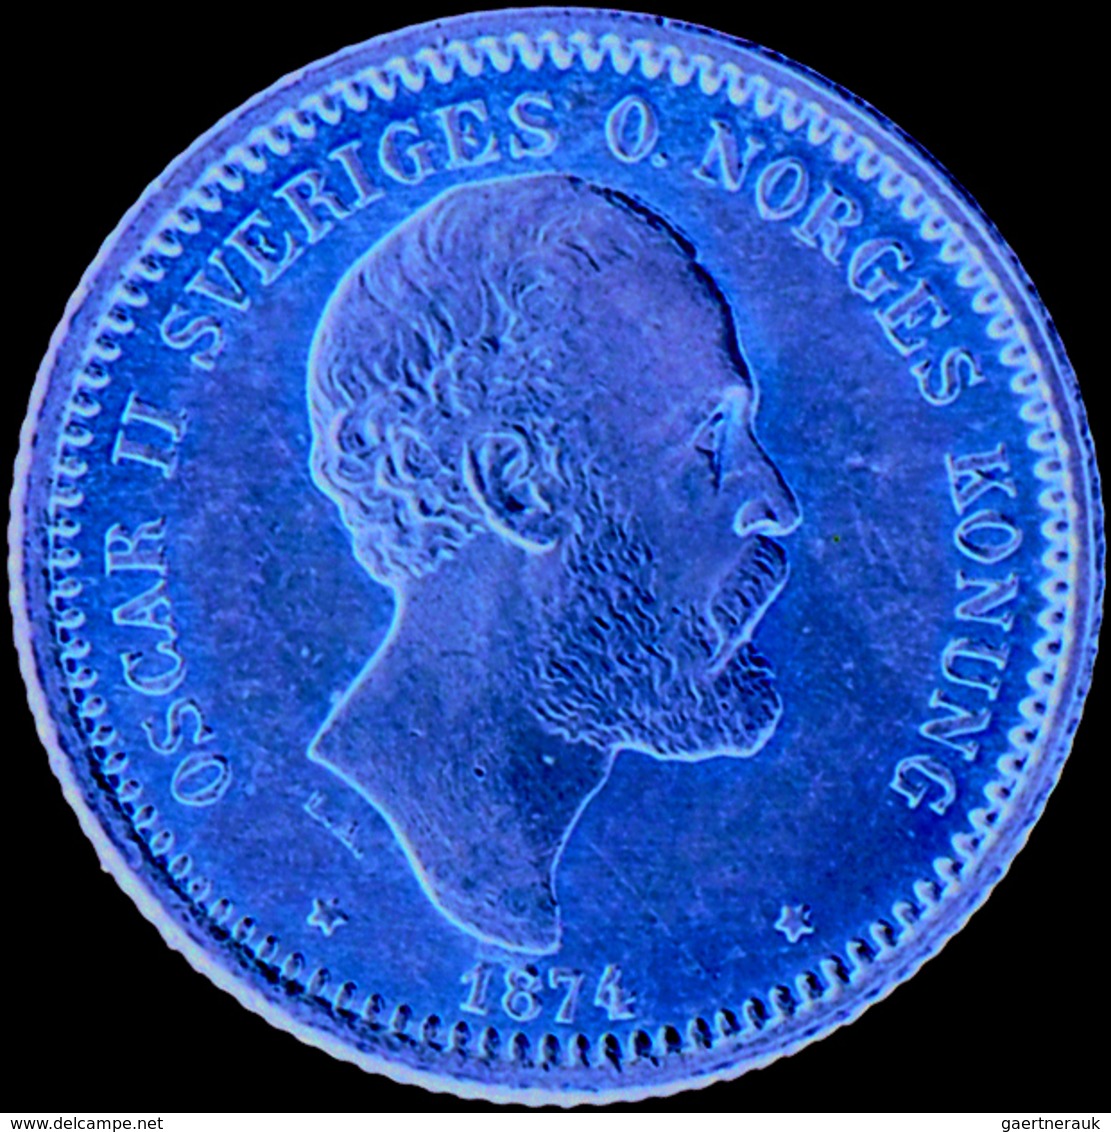 Schweden - Anlagegold: Oscar II. 1872-1907: Lot 2 Goldmünzen: 10 Kronor 1874, KM# 732, Friedberg 94, - Sweden